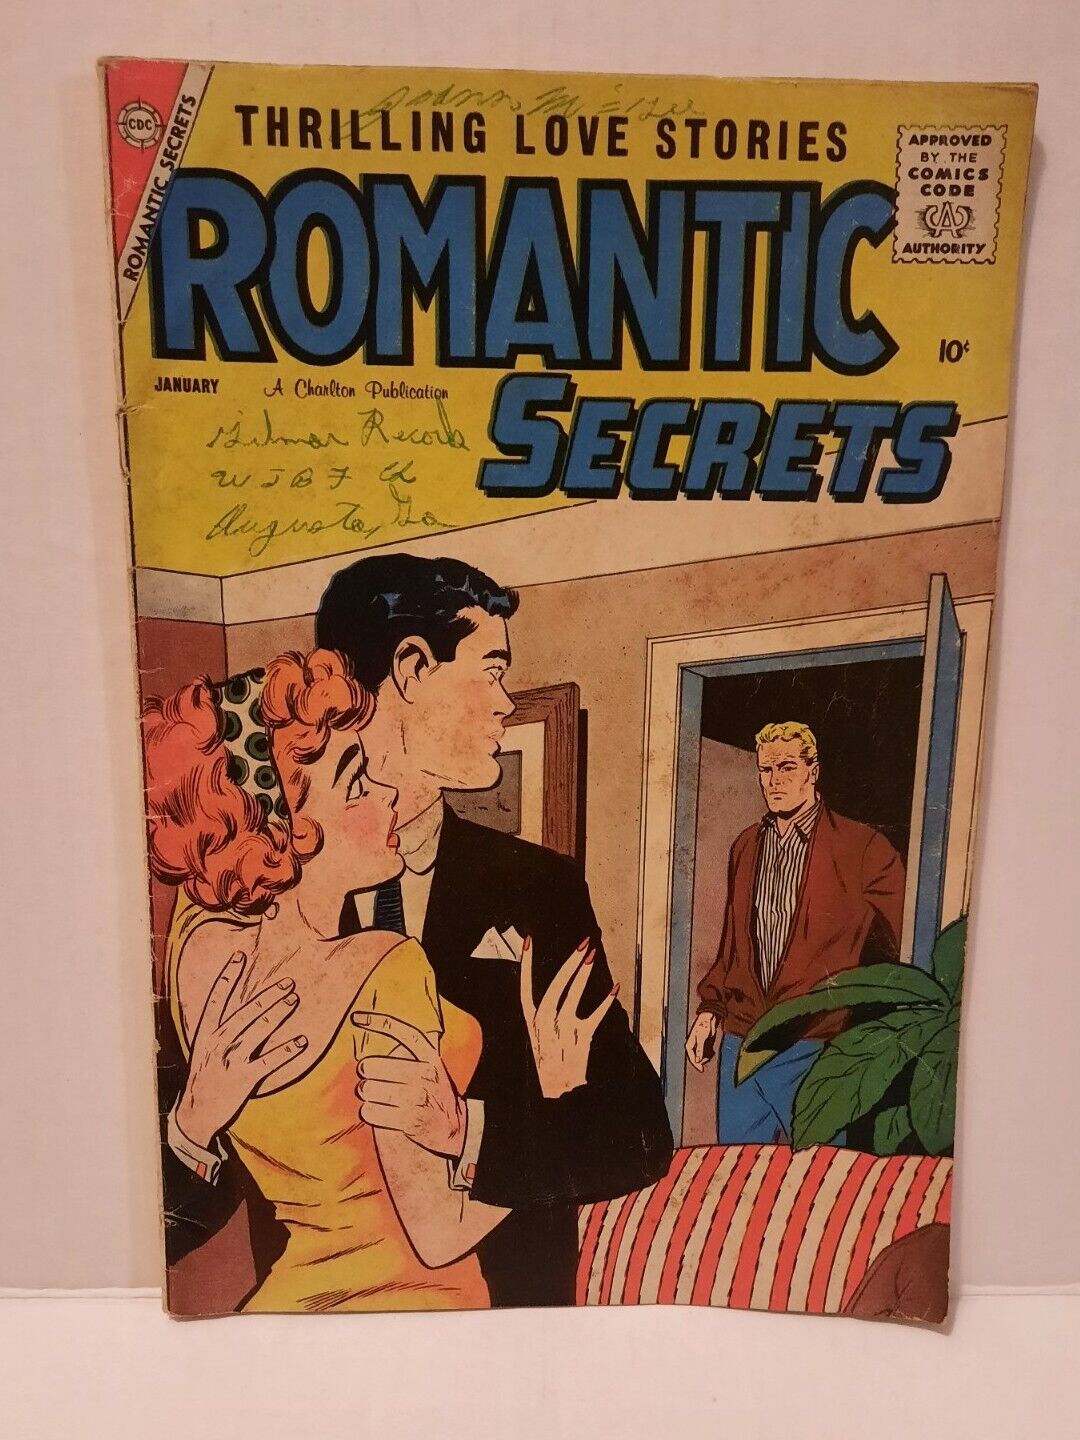 Vintage Romantic Secrets Volume 1 No. 19 January 1959